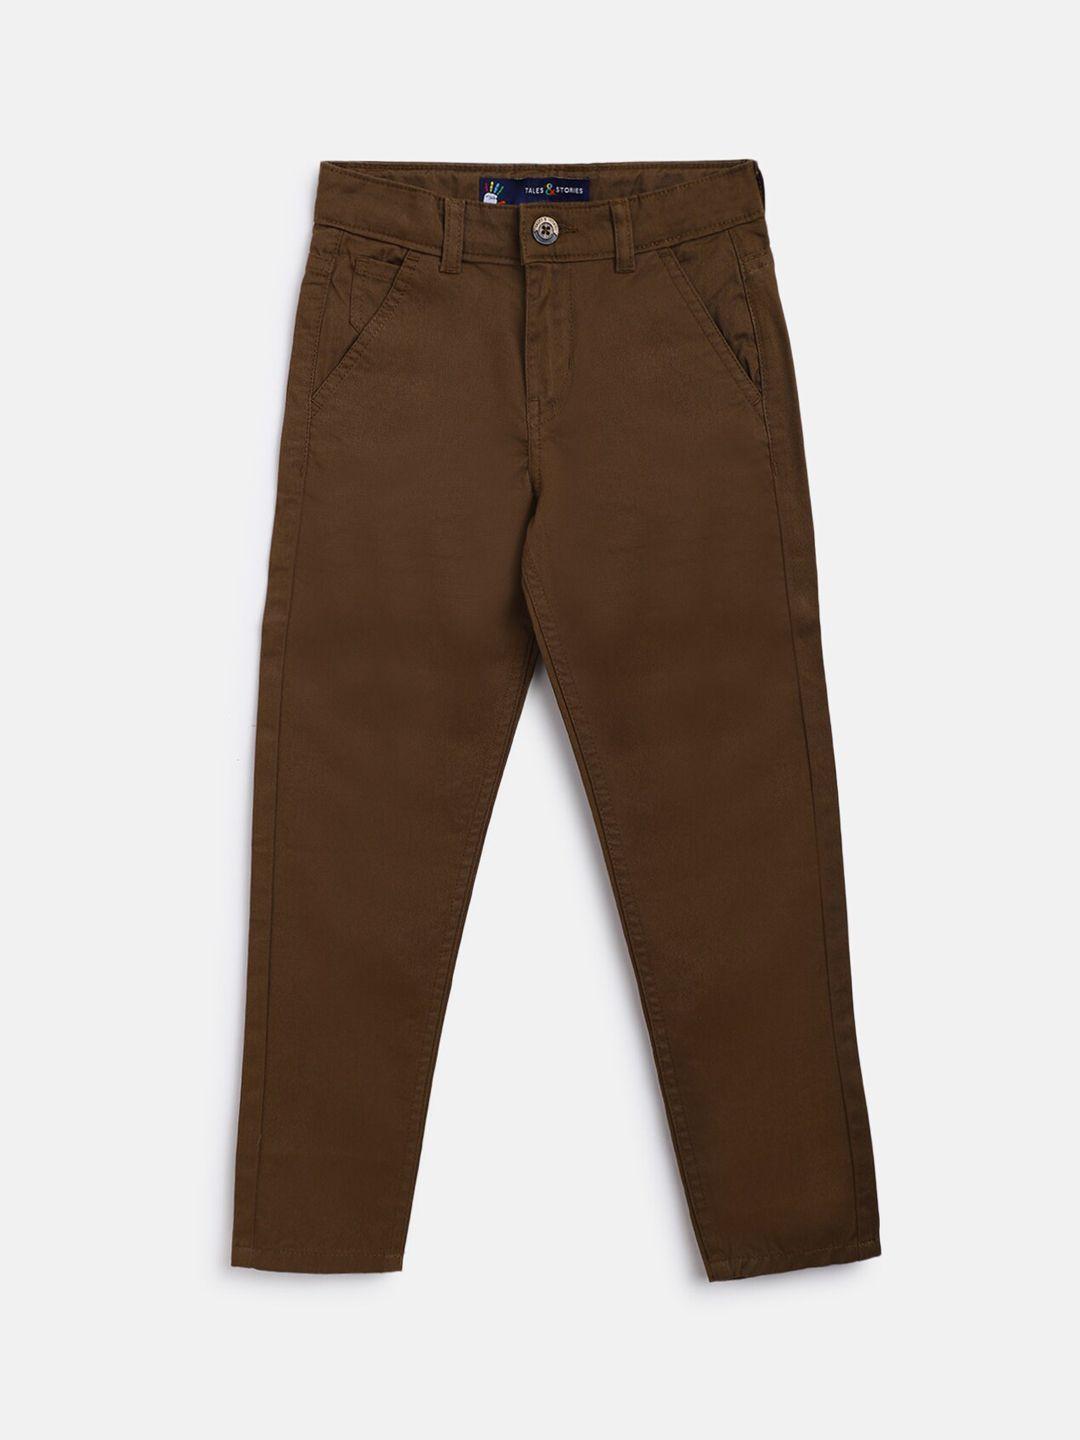 tales-&-stories-boys-brown-slim-fit-chinos-trouser